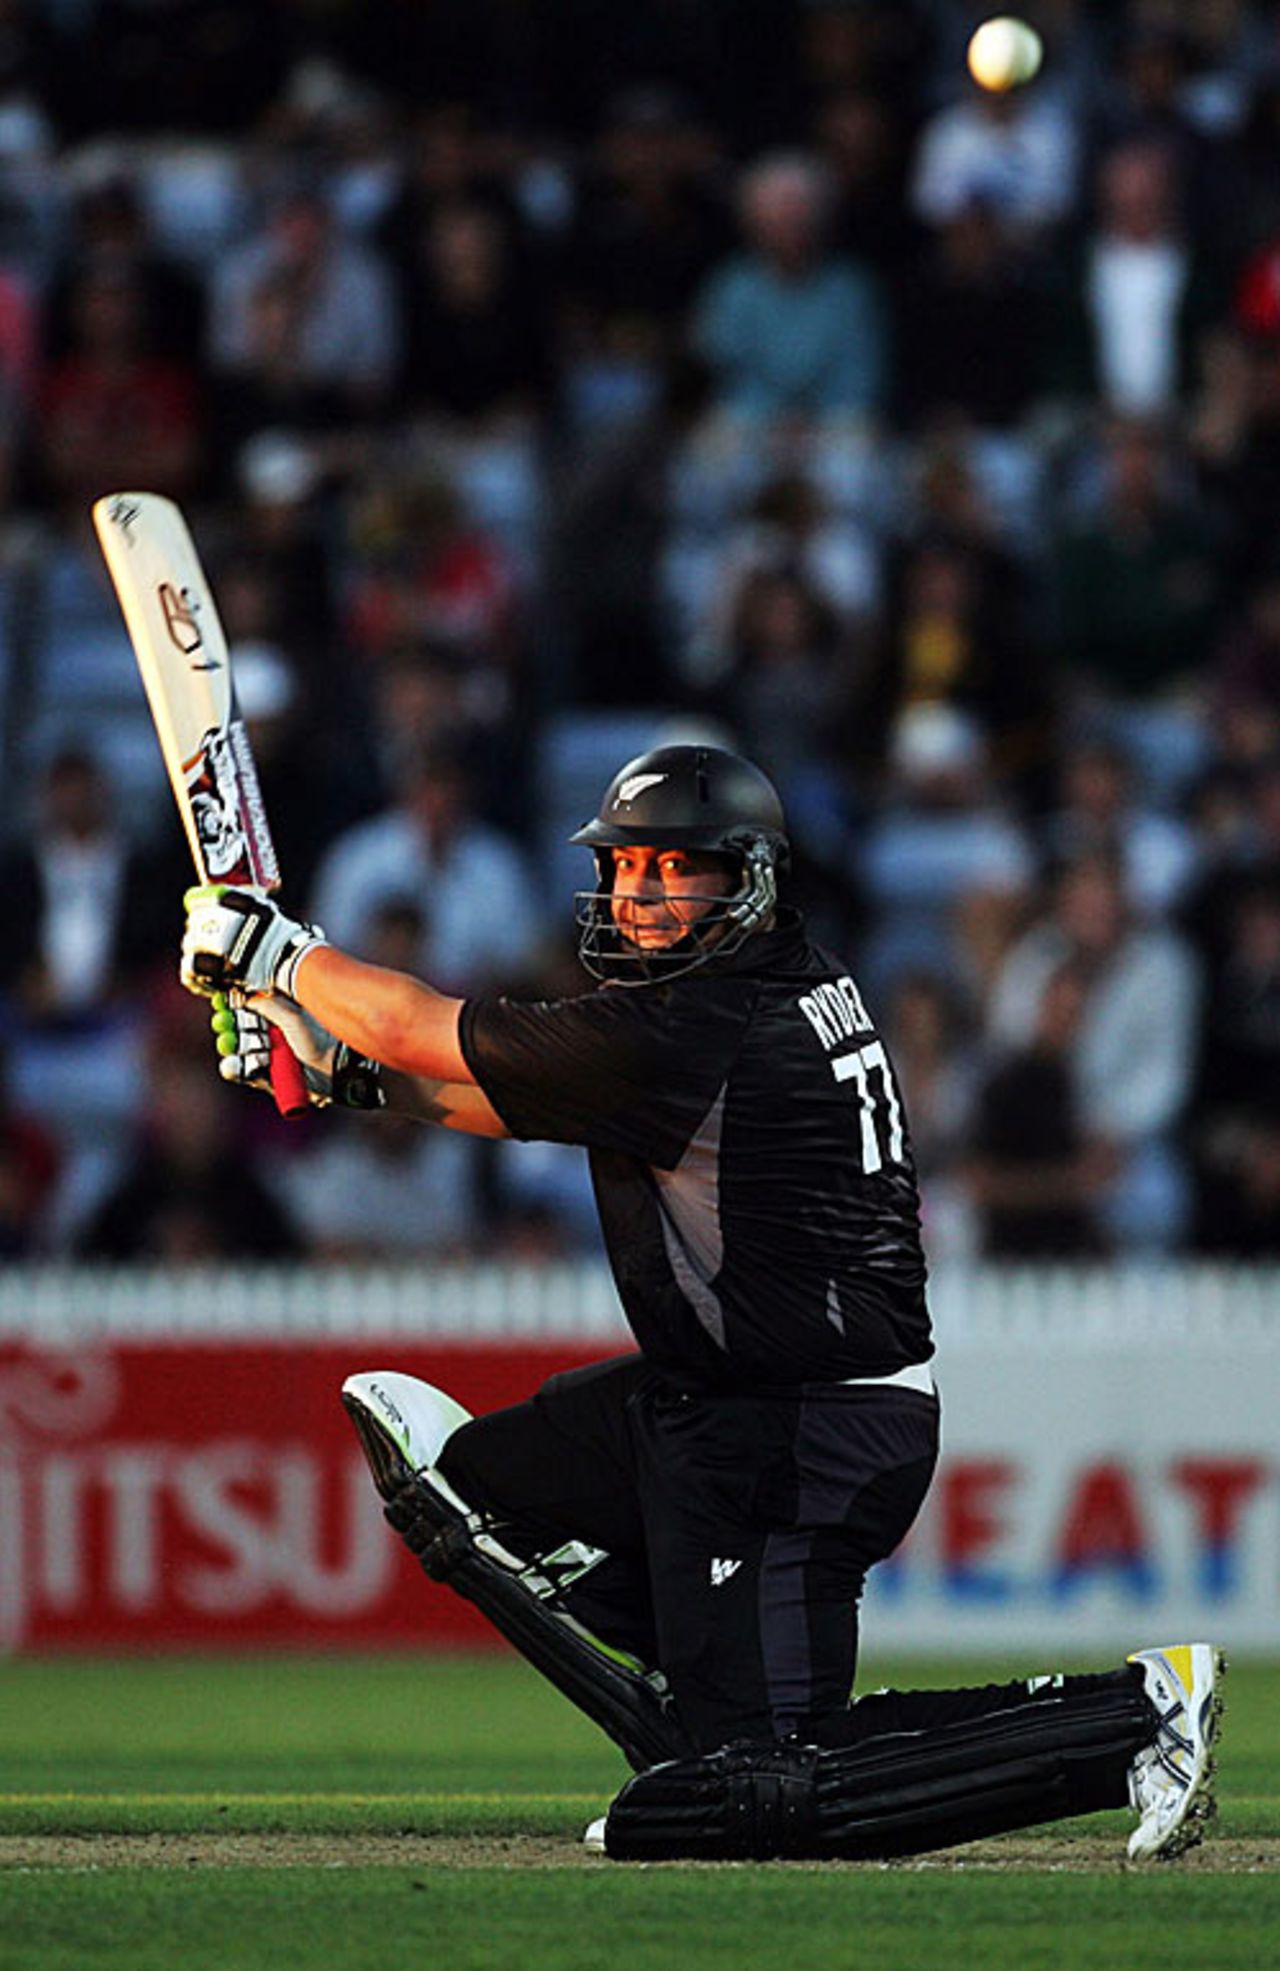 Down on one knee, Jesse Ryder uppercuts behind square, New Zealand v England, 2nd ODI, Hamilton, February 12, 2008